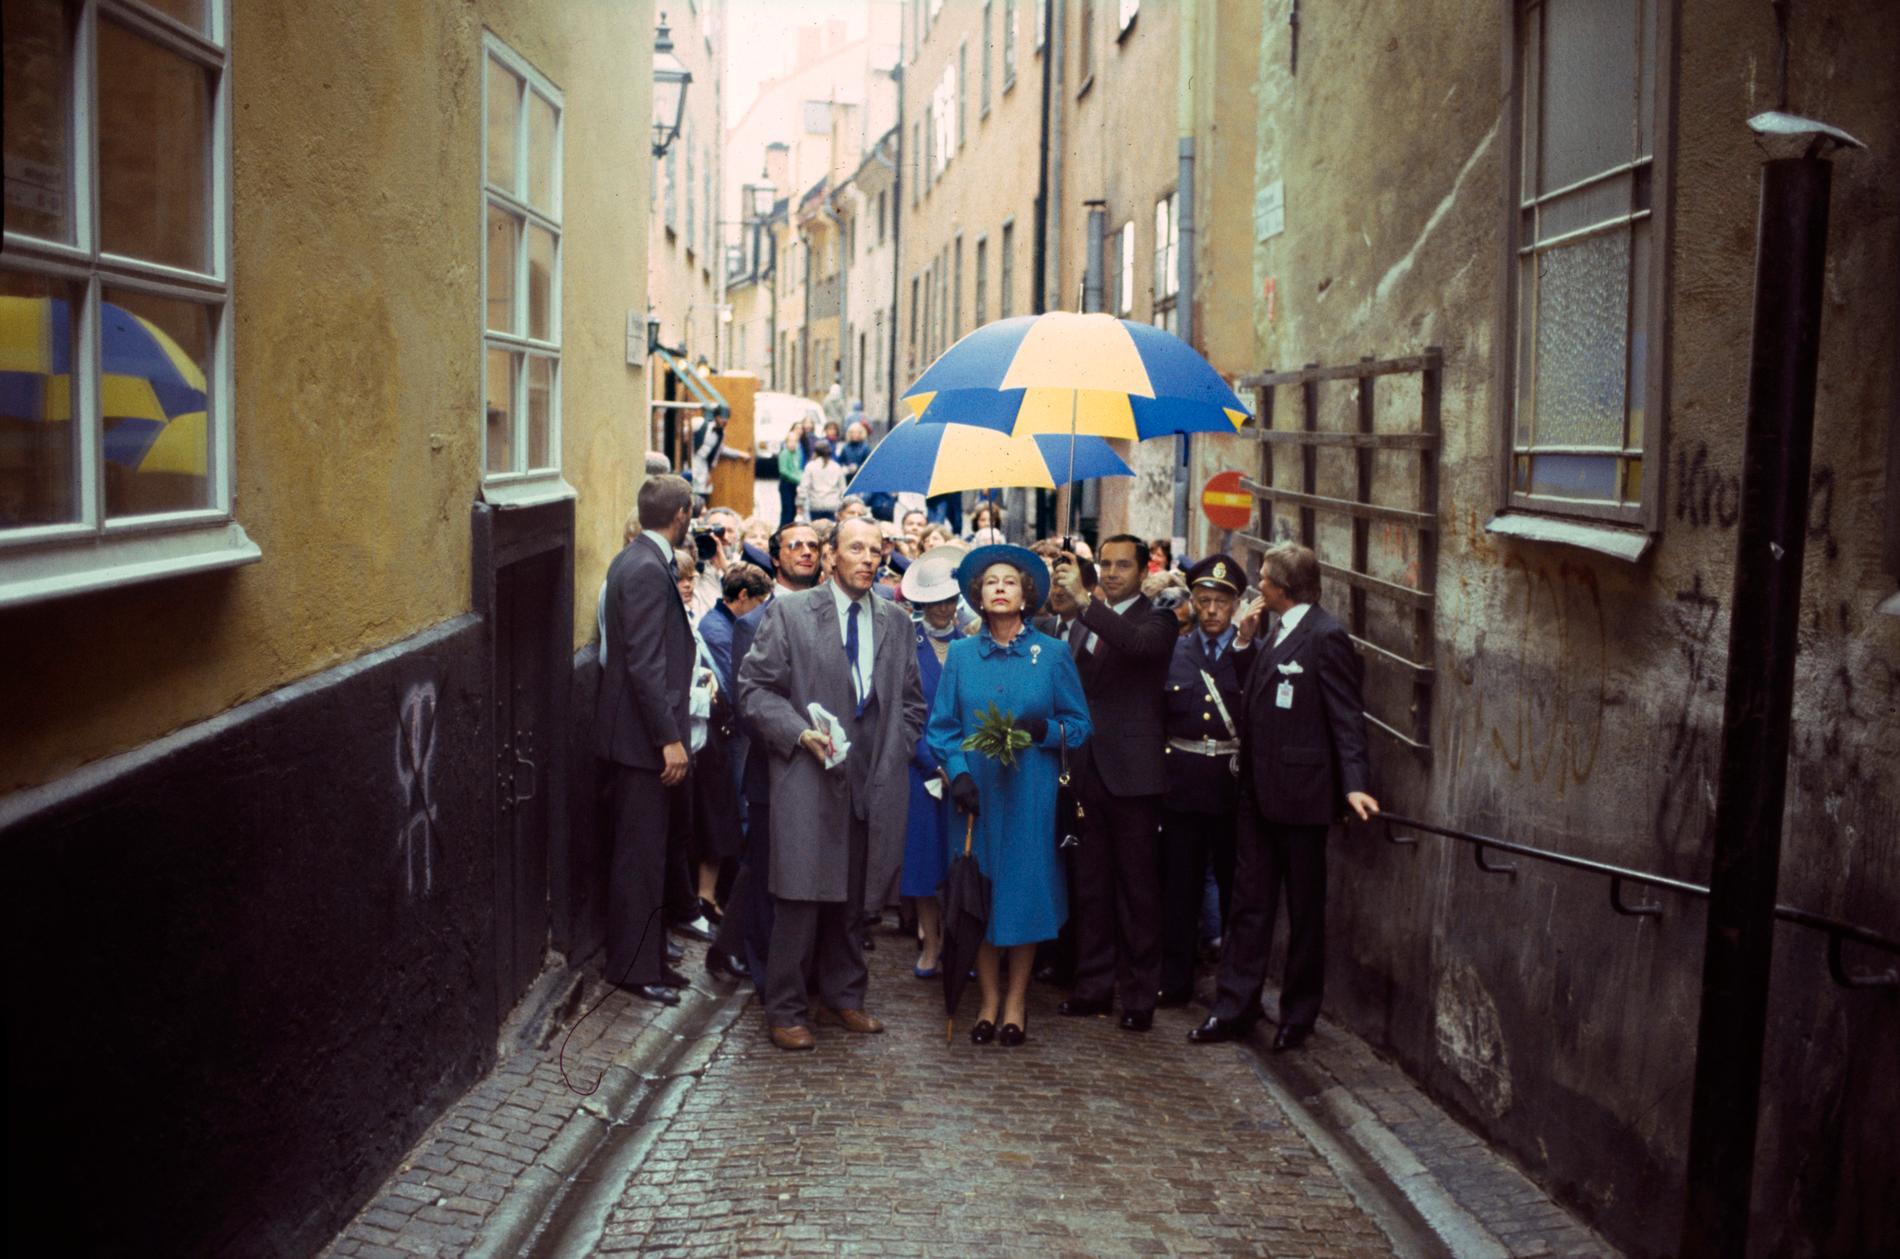 Rundtur i Gamla stan med det svenska kungaparet 1983. 